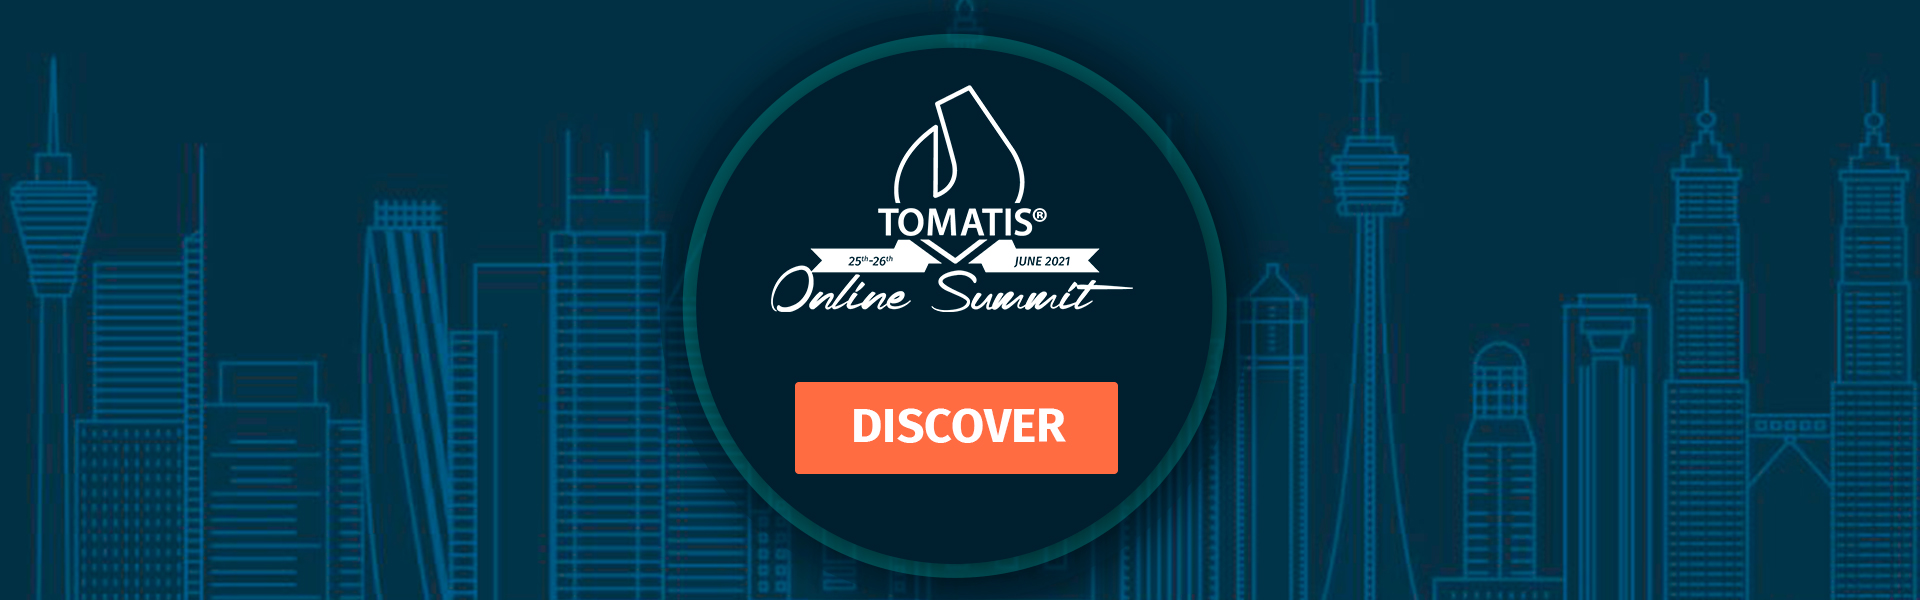 Online summit banner EN